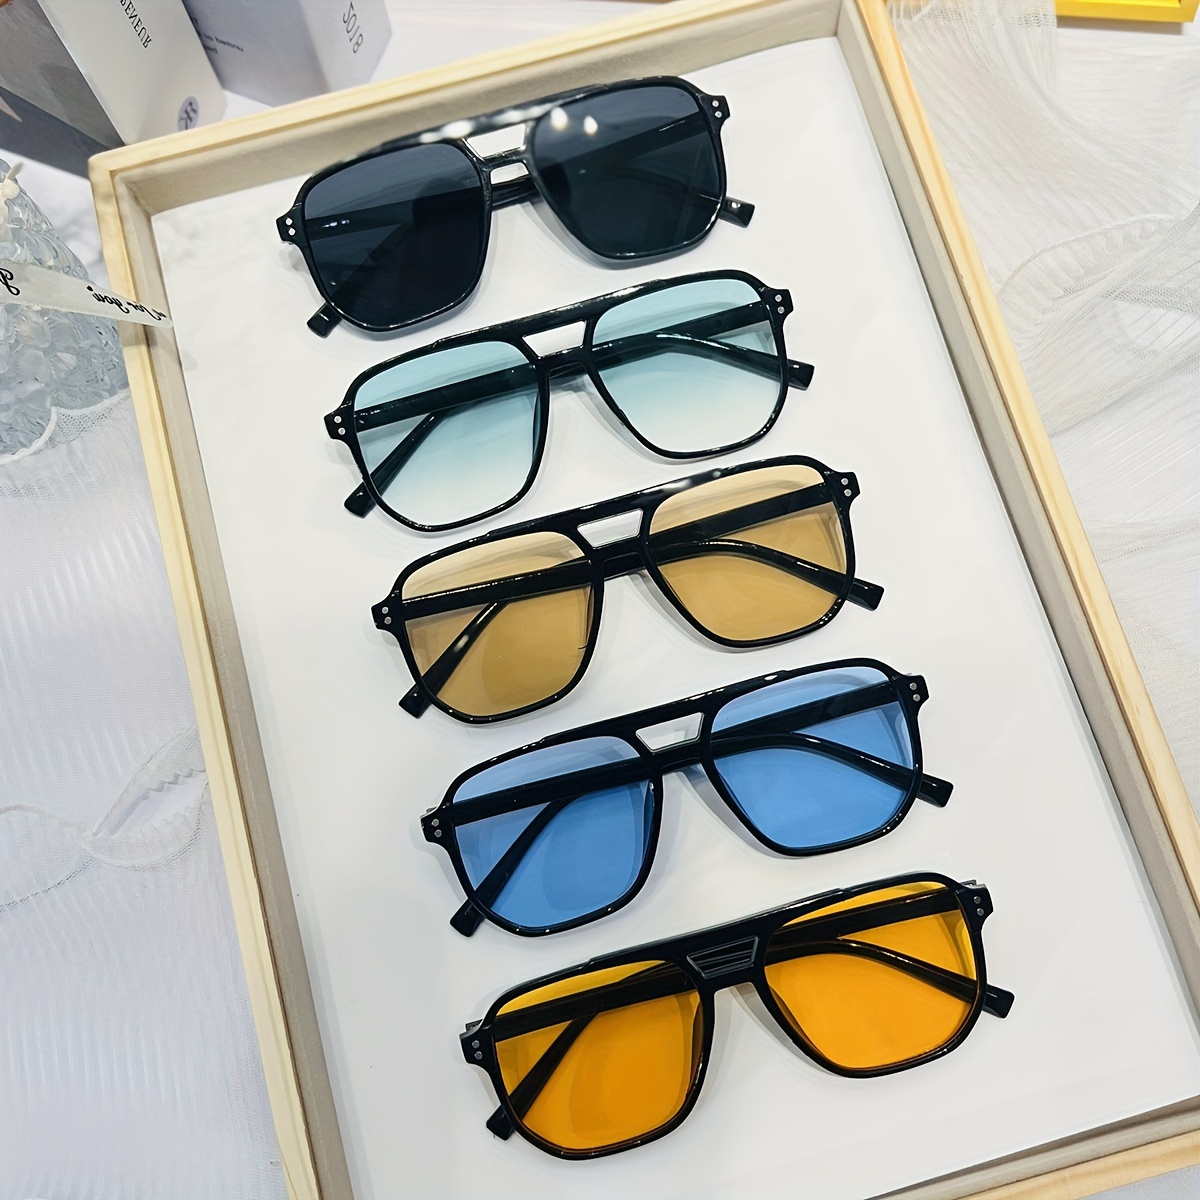 

5pcs Men's Geometric Square Multicolor Lens Fashion Glasses - Double Beam Flat Top Large Size Glasses